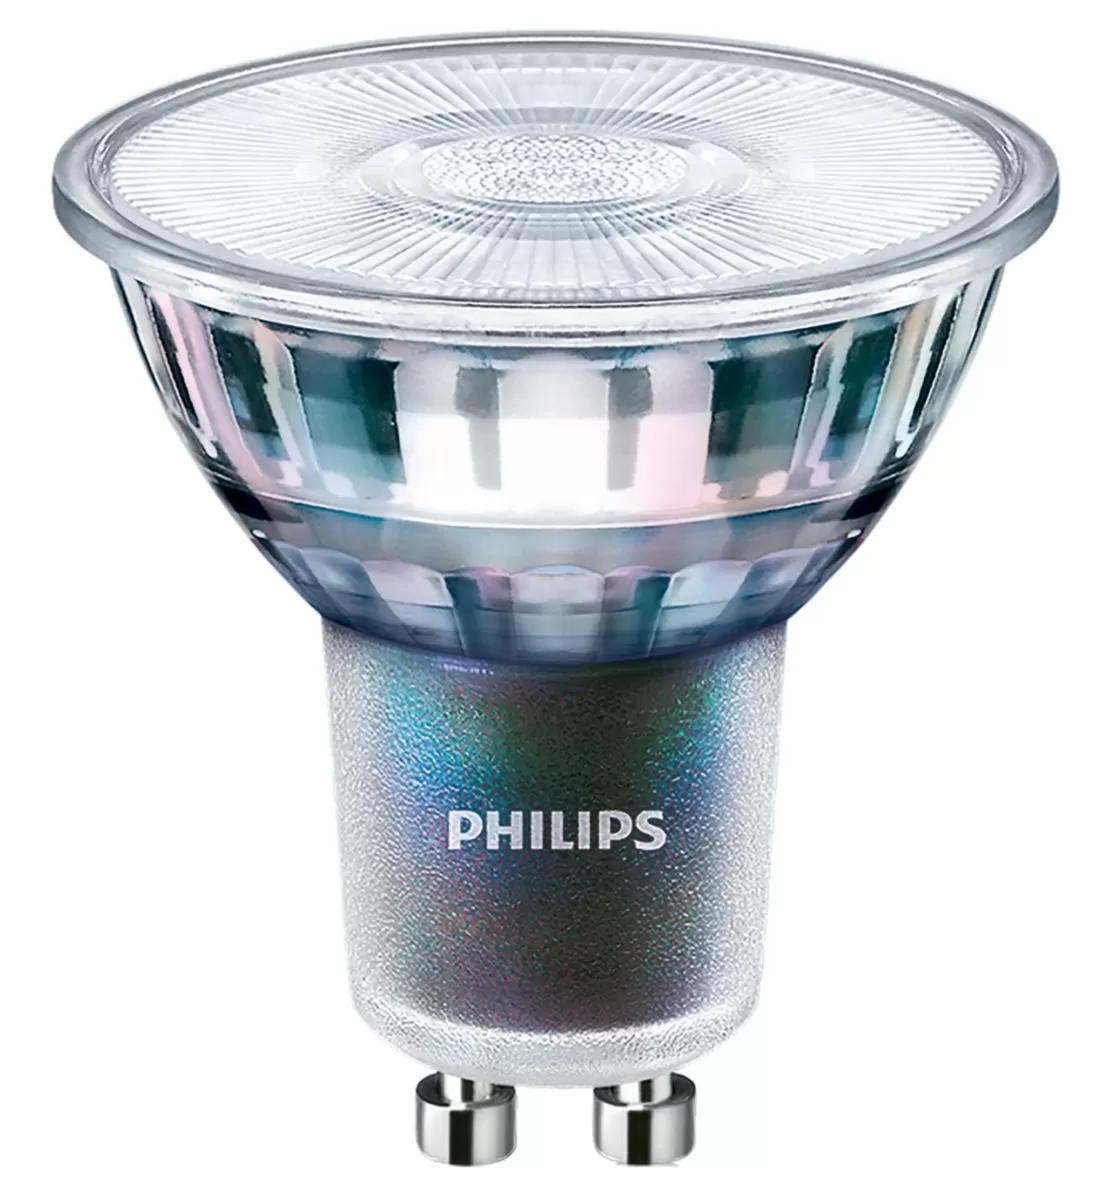 Signify MASTER LEDspot GU10 ExpertColor - LED-lamp/Multi-LED - Energieeffizienz-Label (EEL): A+ - Ähnlichste Farbtemperatur (Nom): 3000 K 70763000